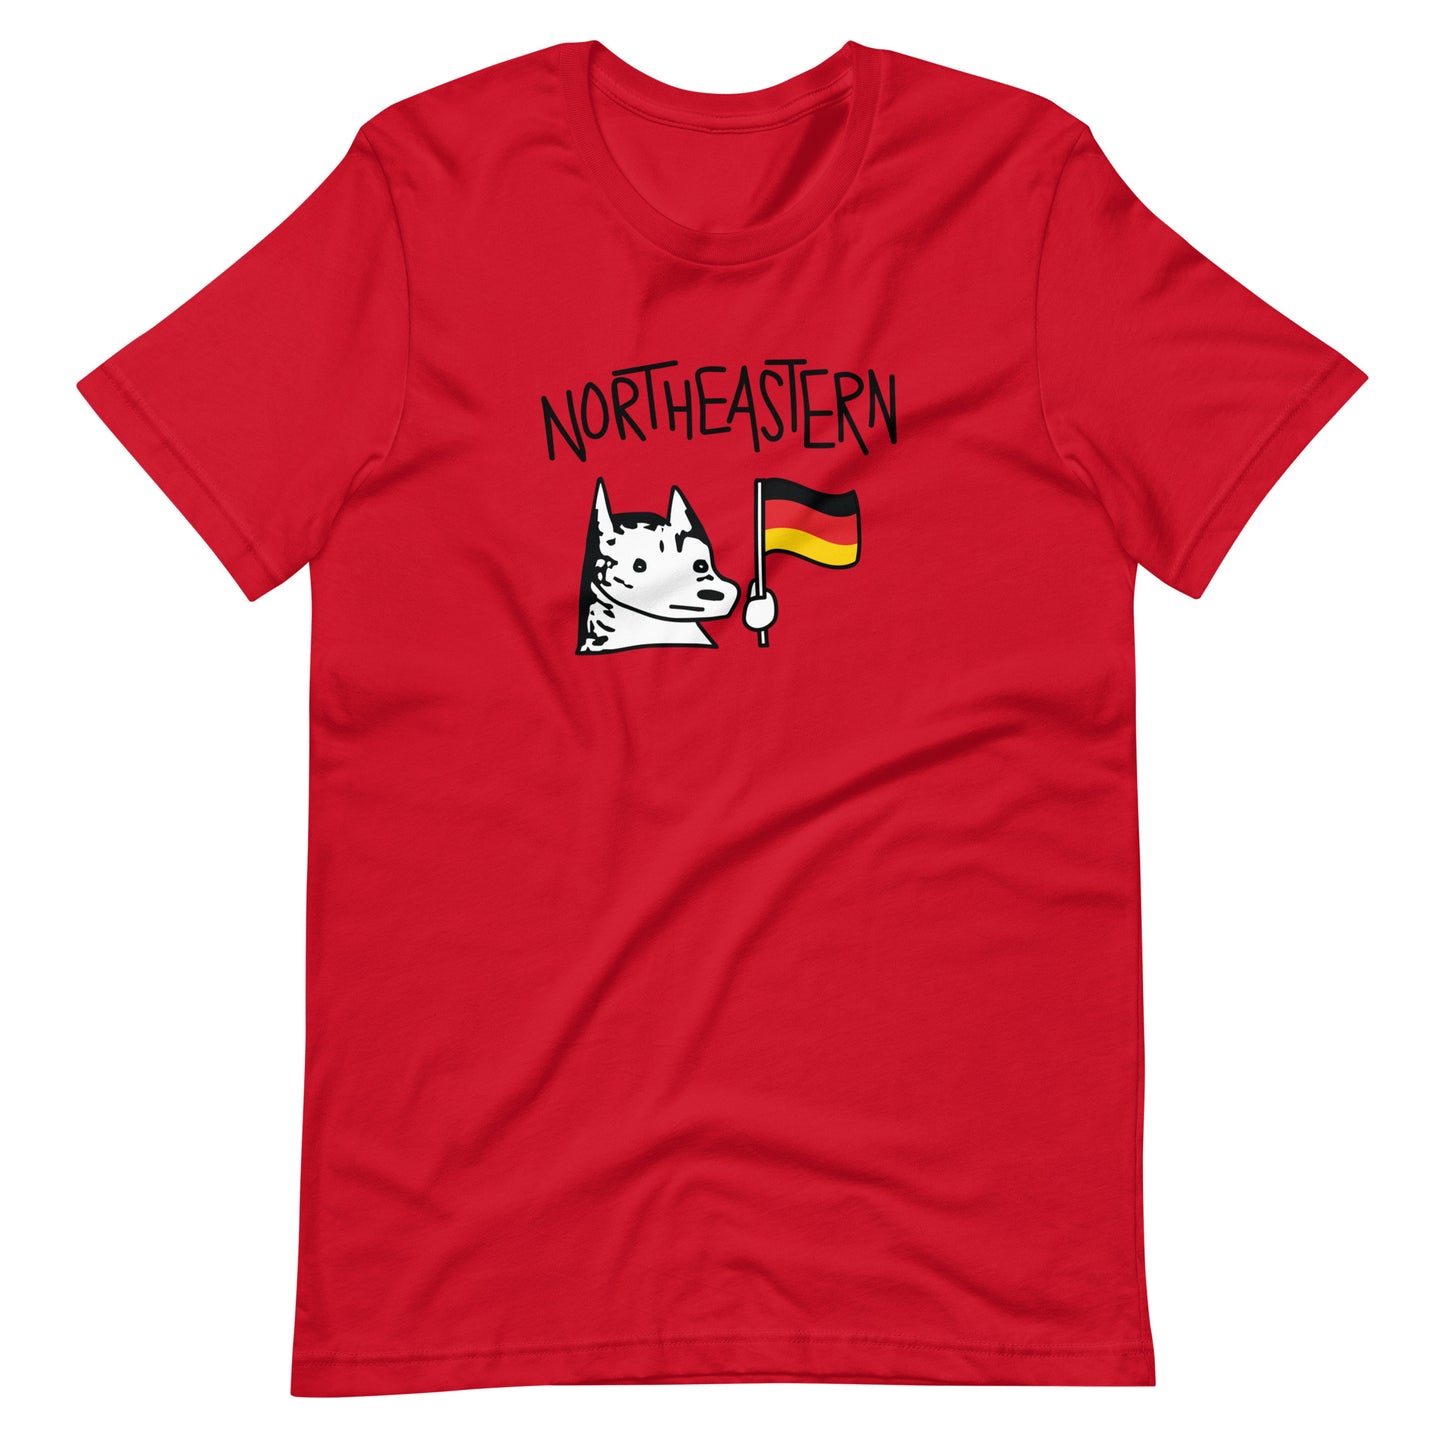 HOOSKYin Germany T-shirt